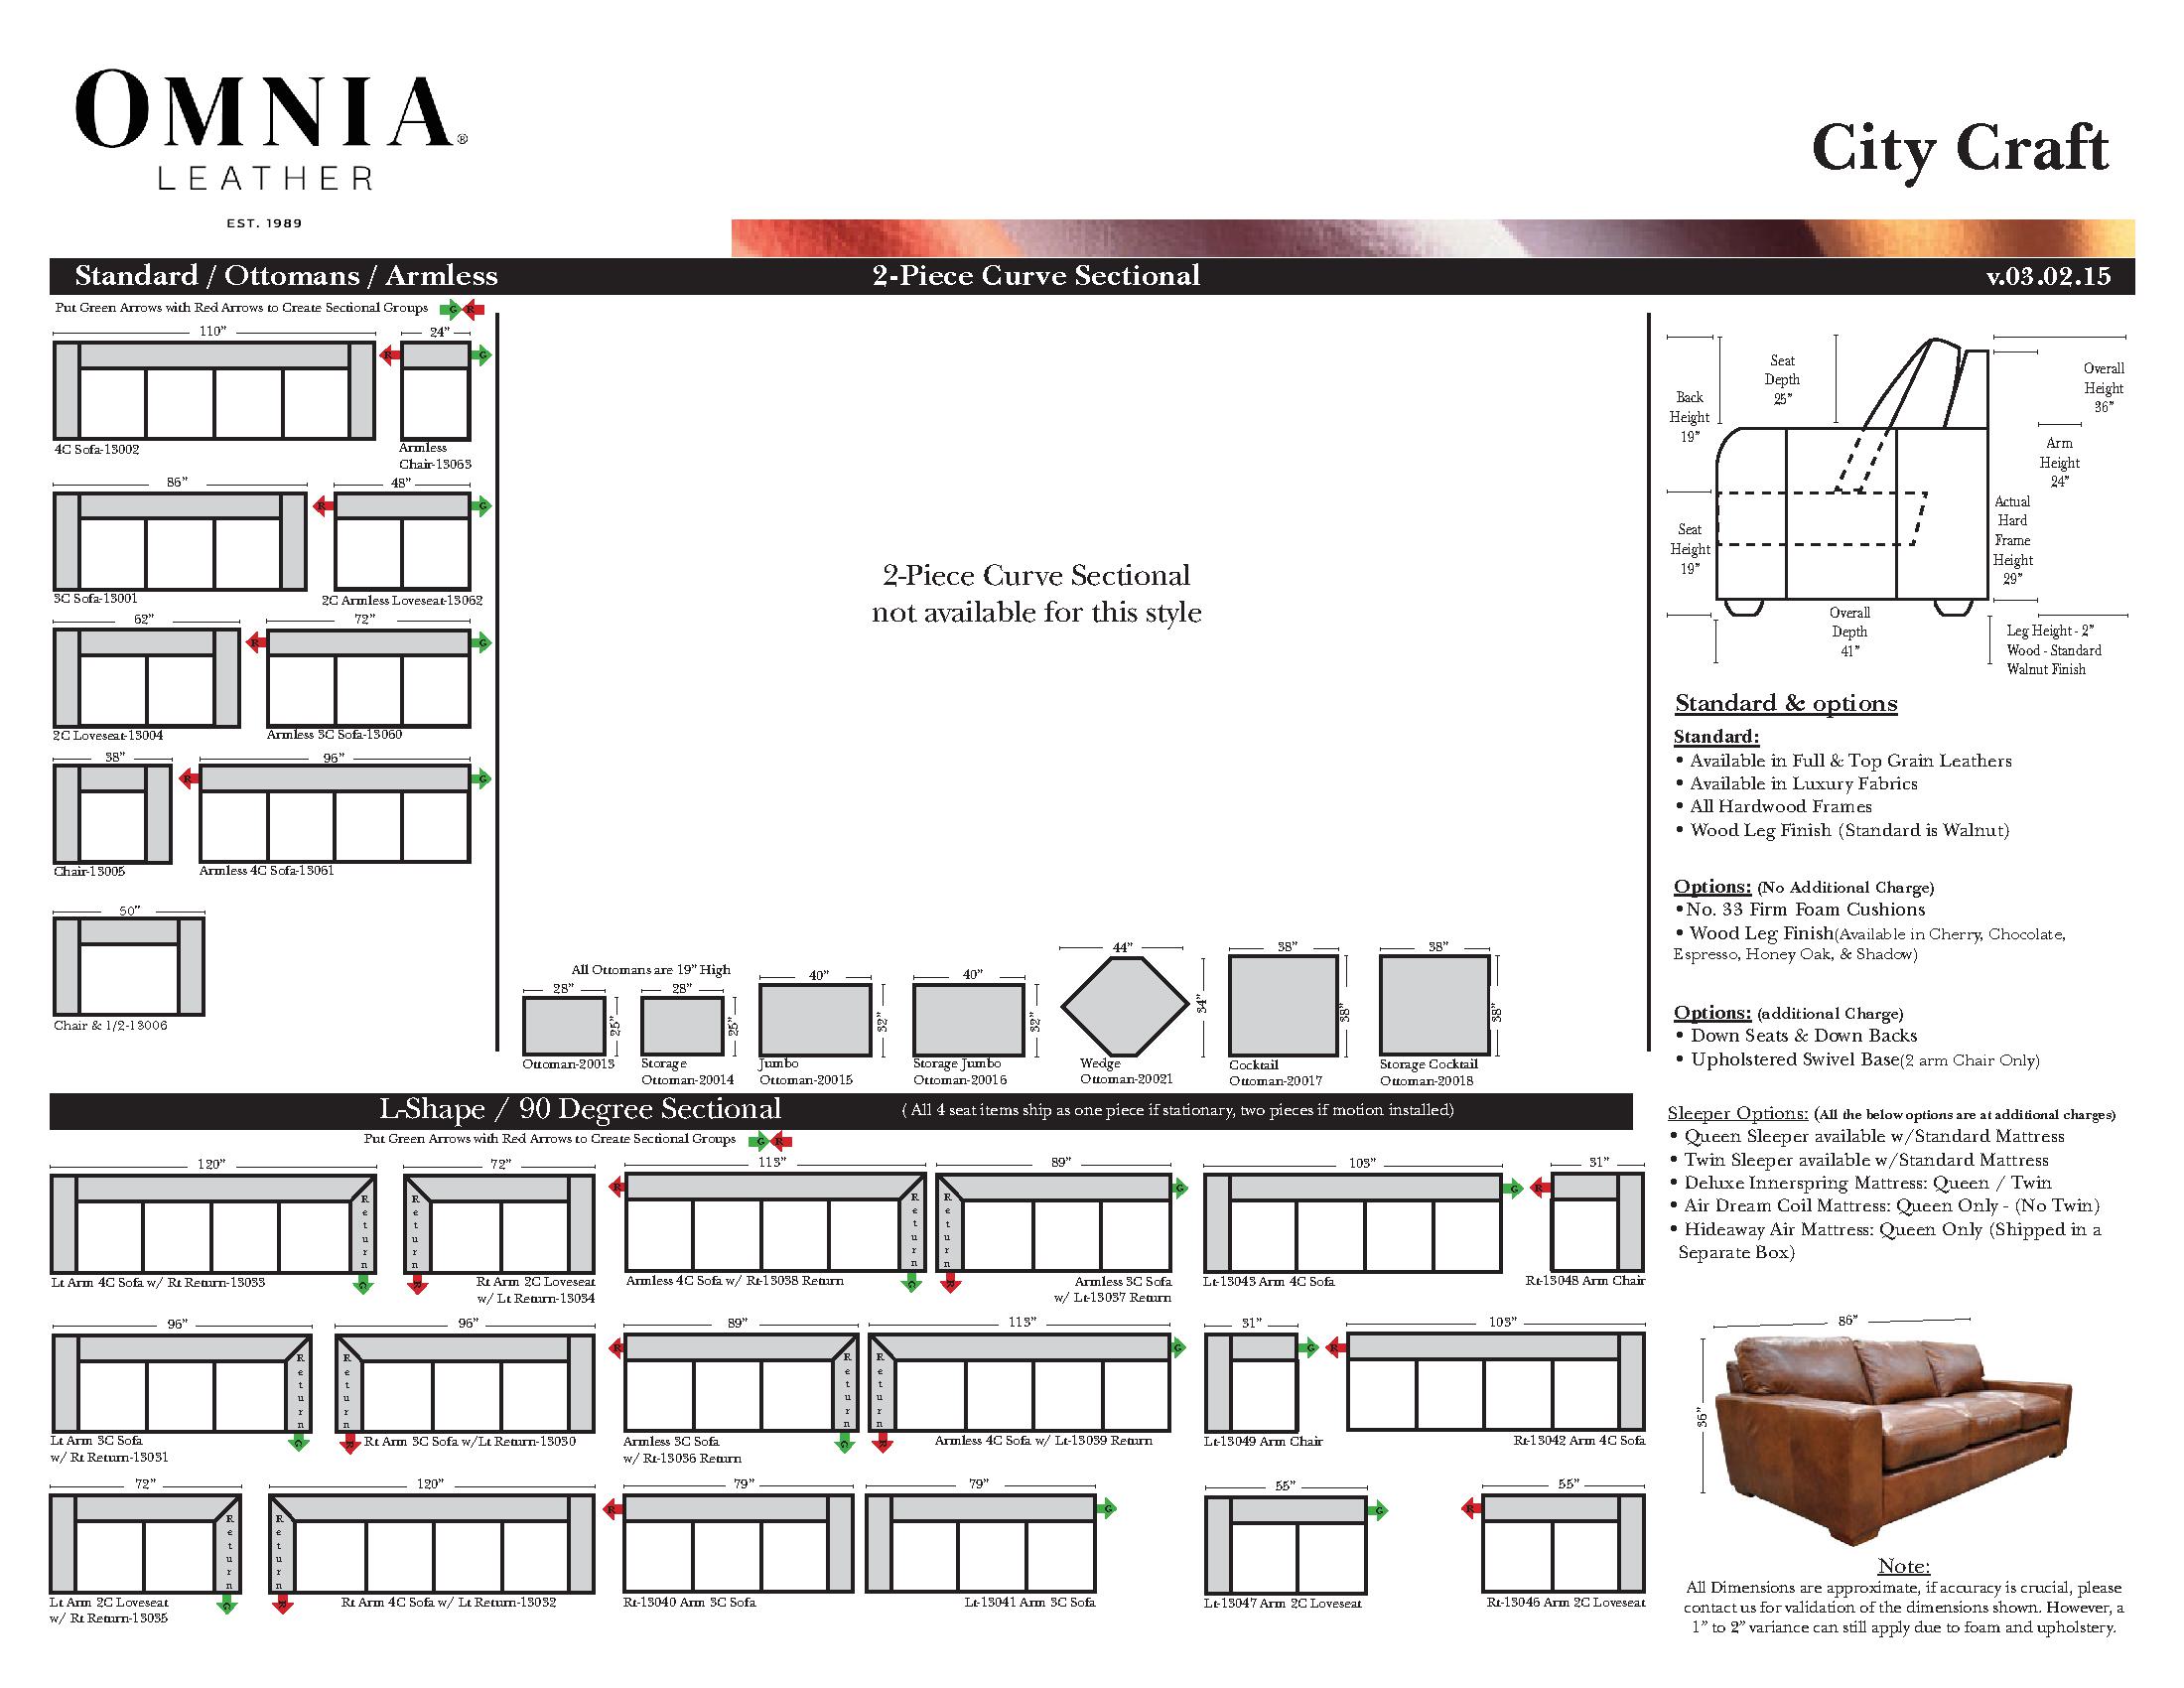 City Craft Omnia Layout